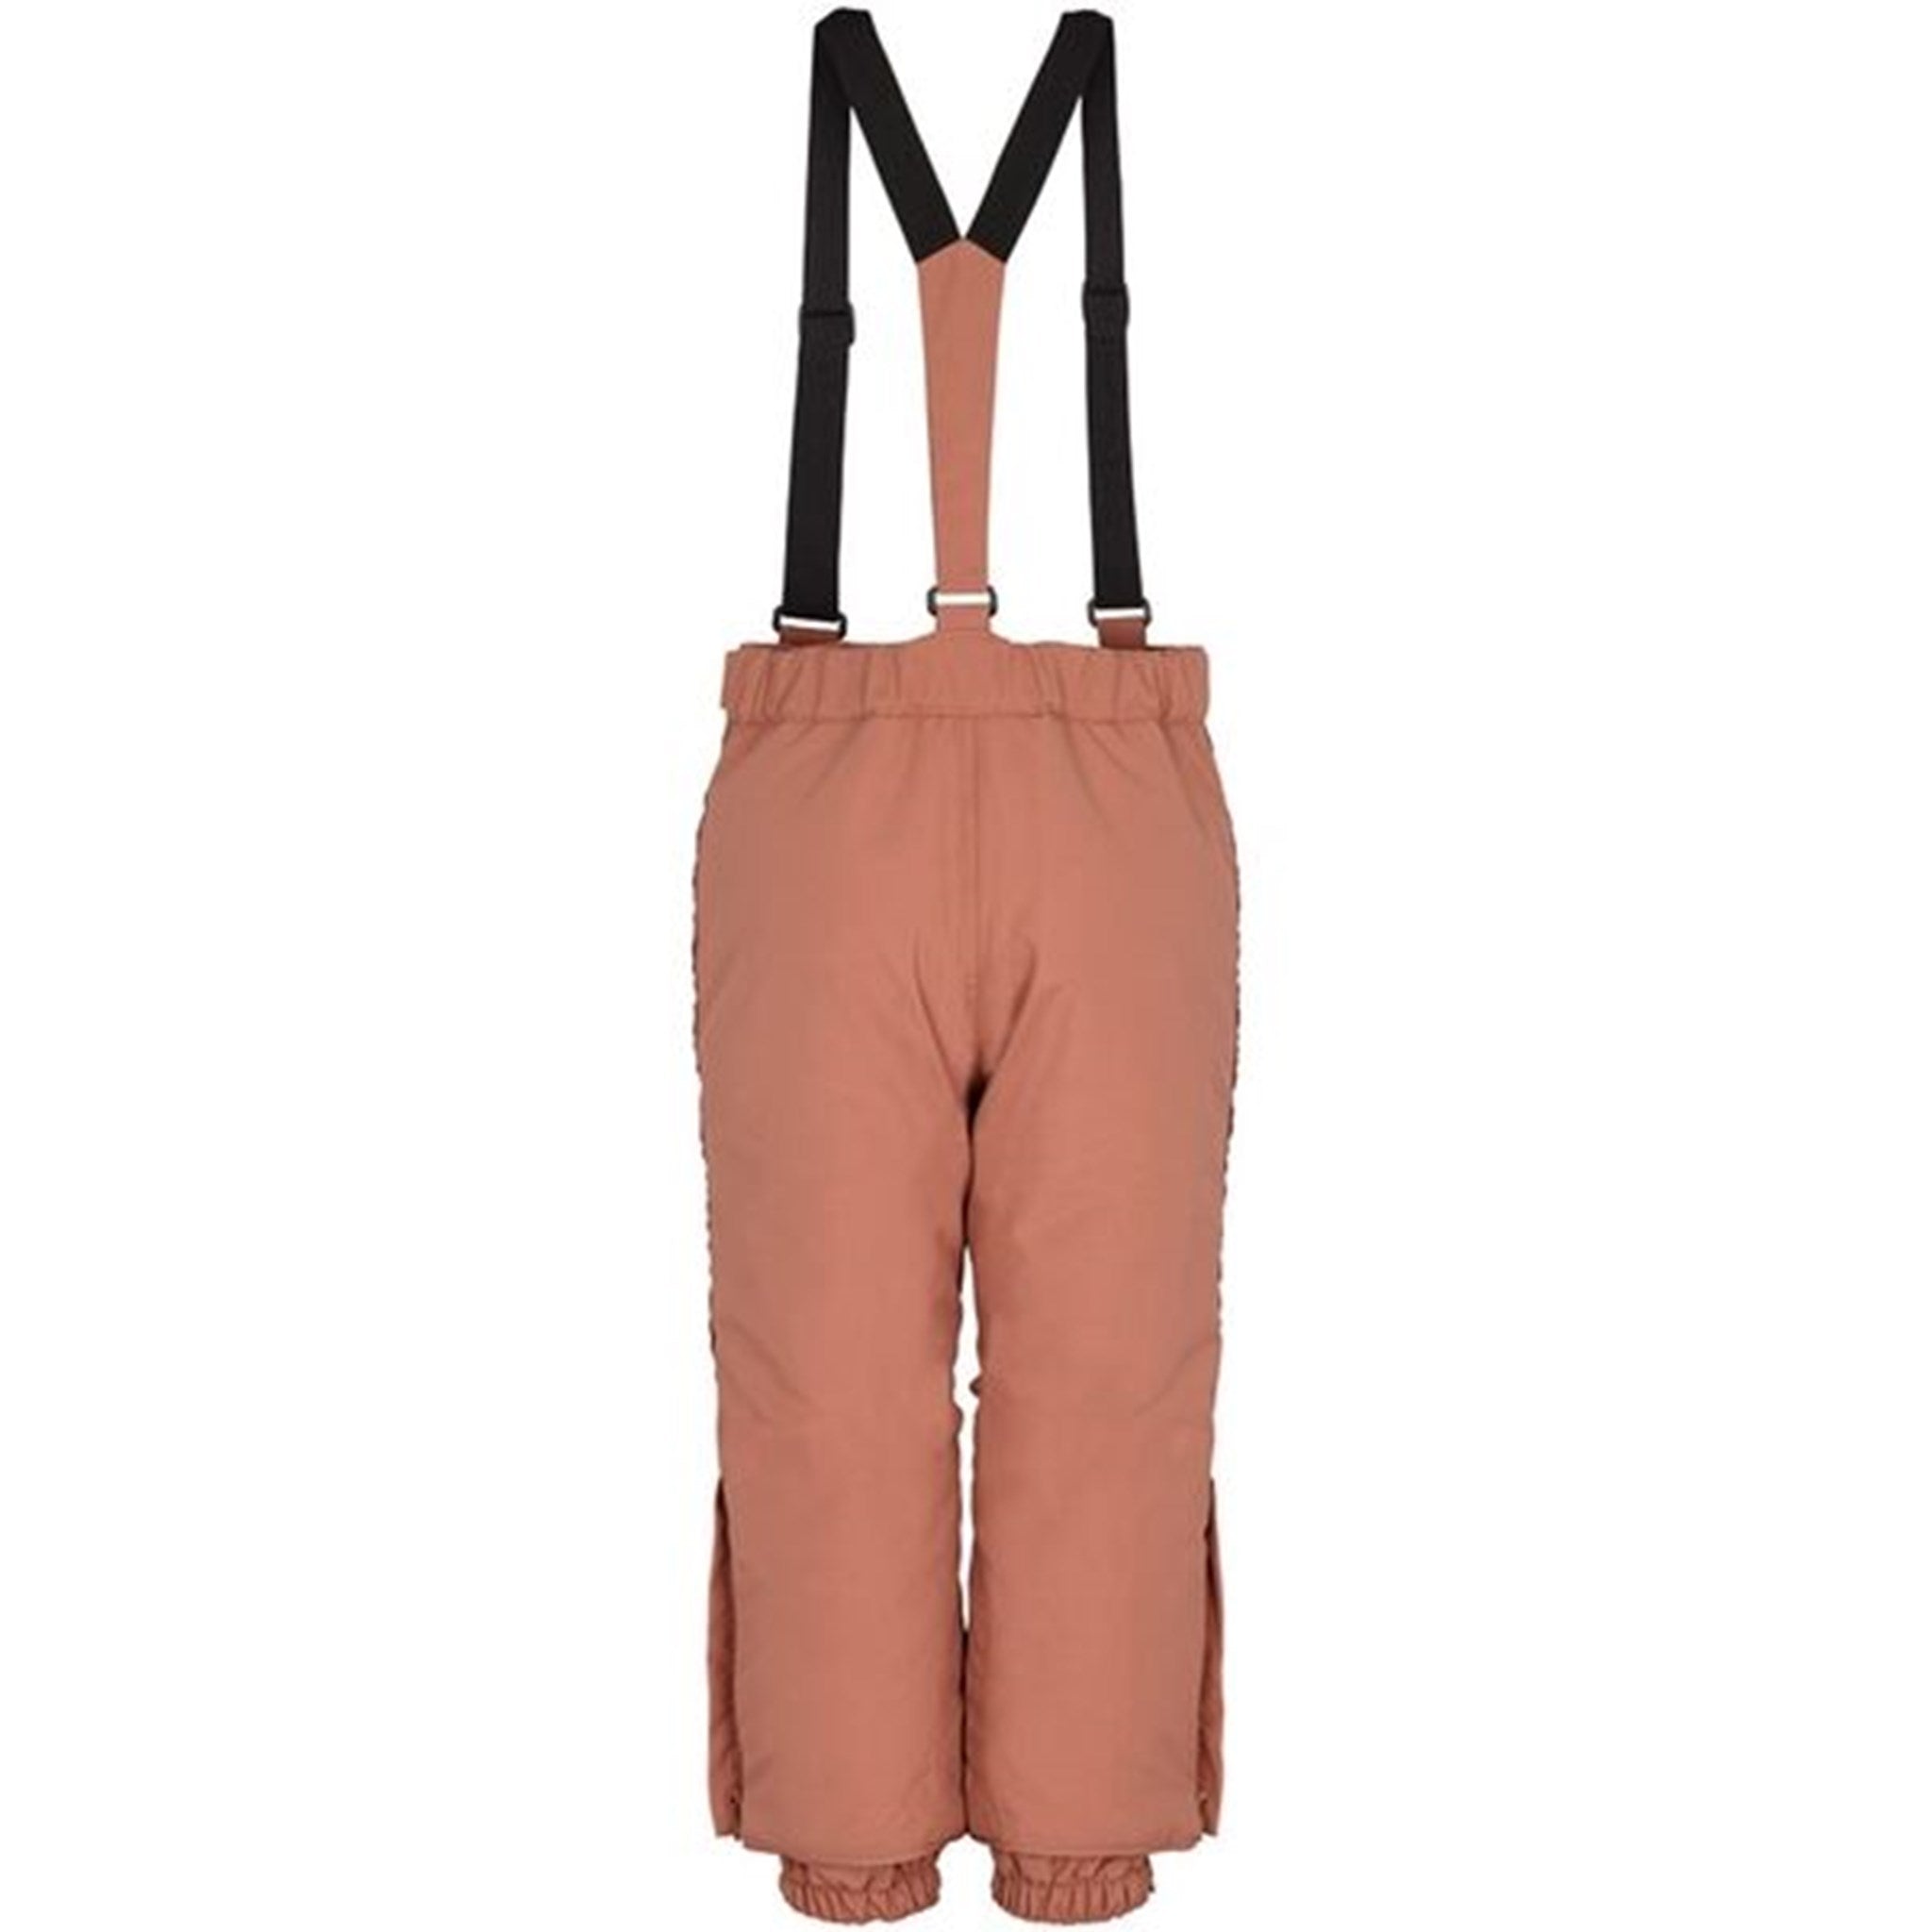 MarMar Outerwear Pants Orla Rose Blush 2